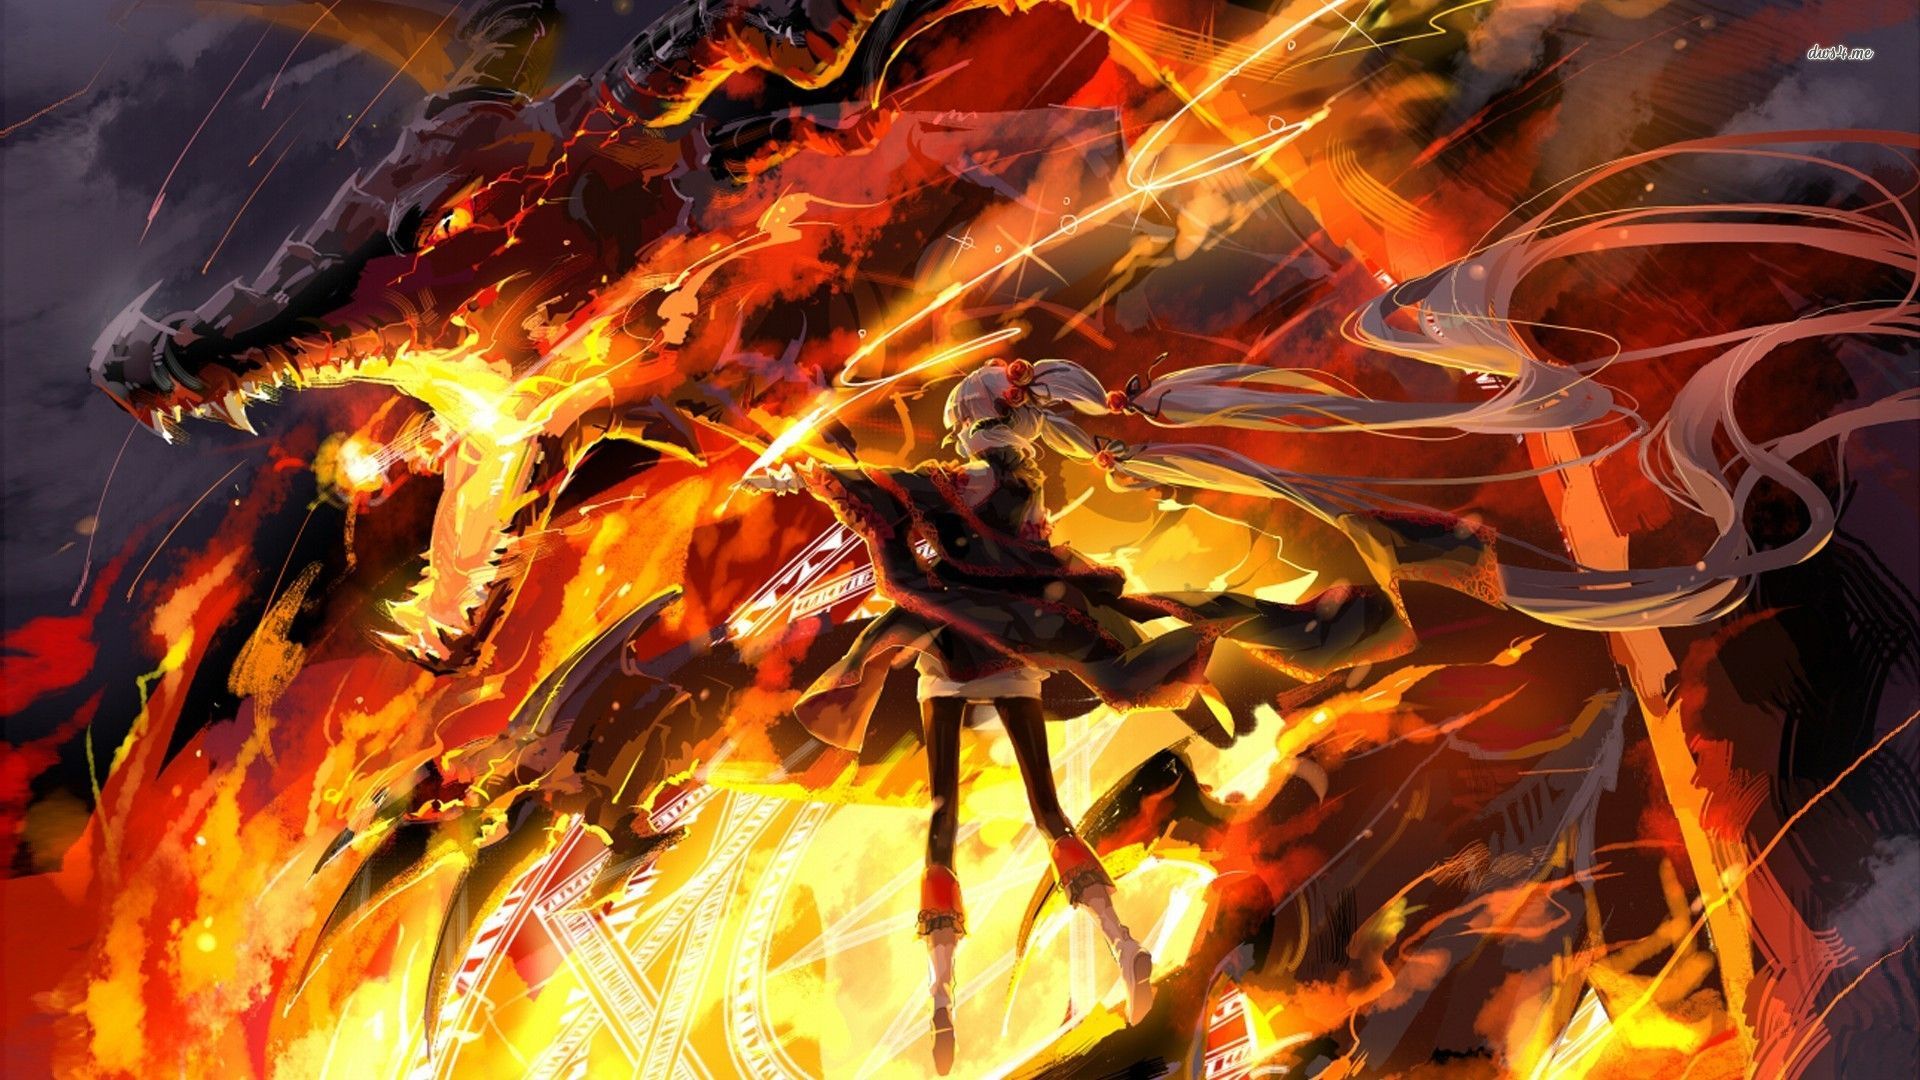 fire dragon girl. Warriors wallpaper, Background image, Fire dragon